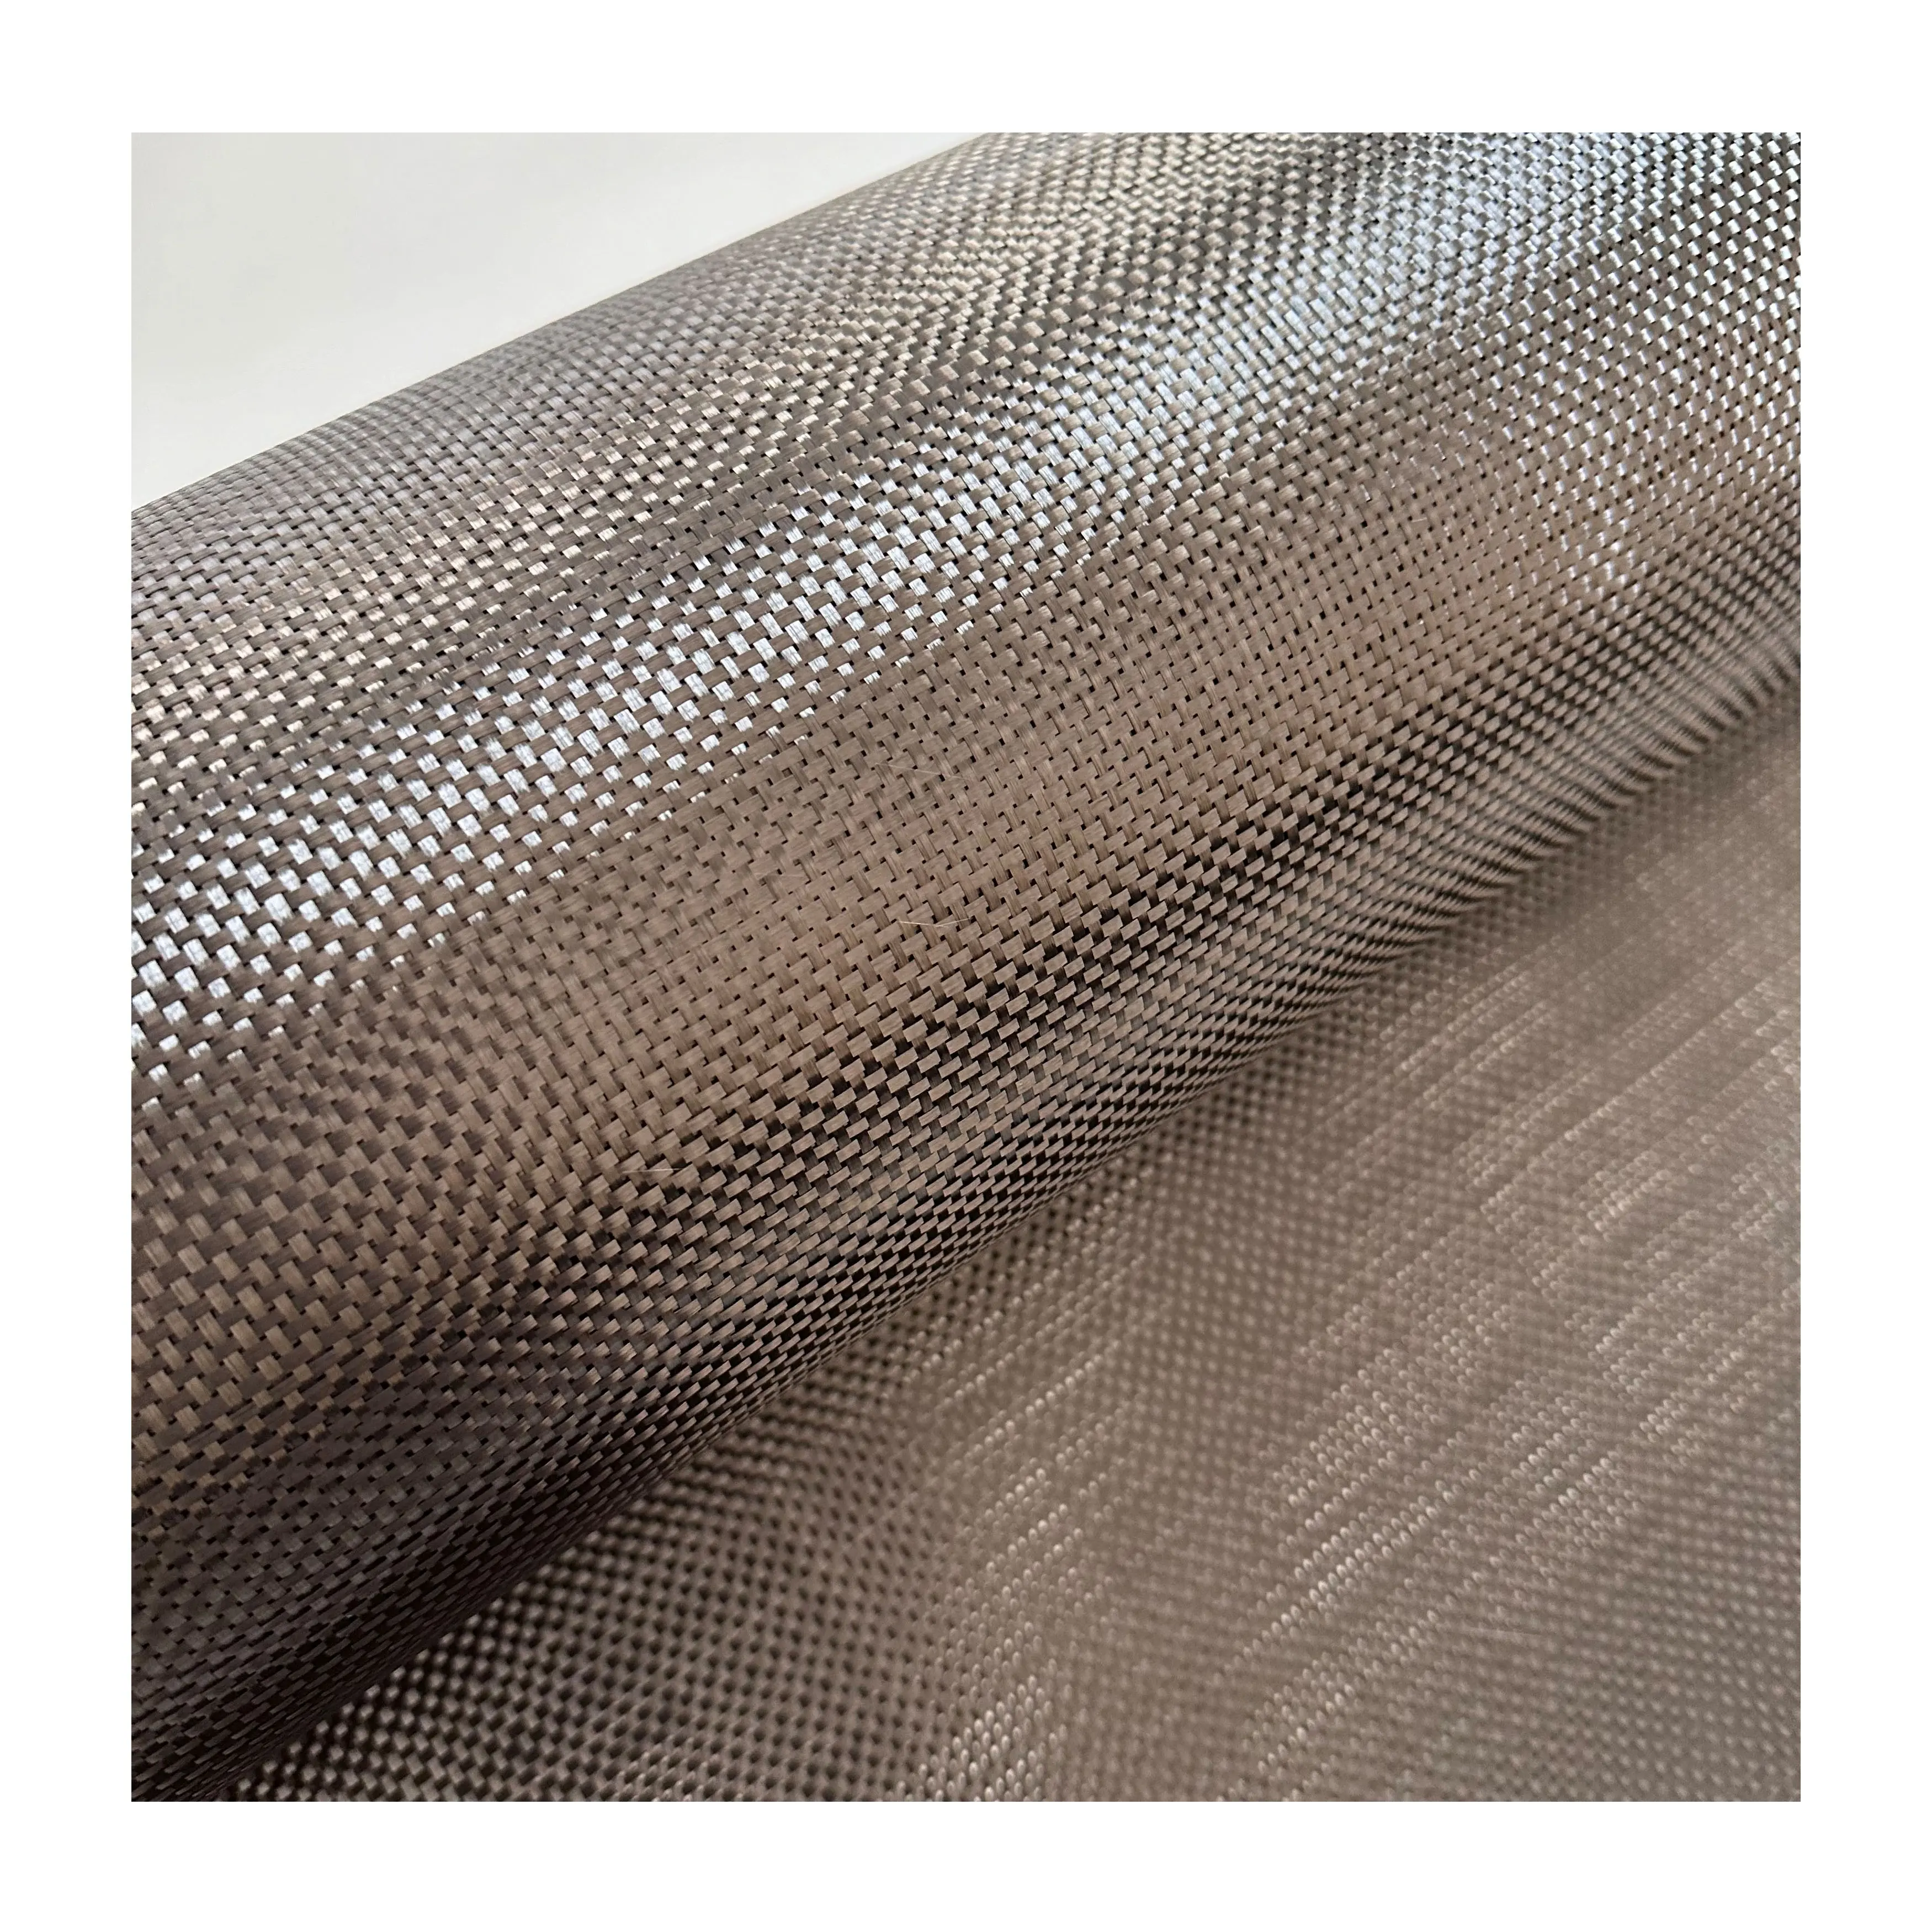 activated carbon fiber fabric electrically conductive 3k carbon fiber cloth 160g